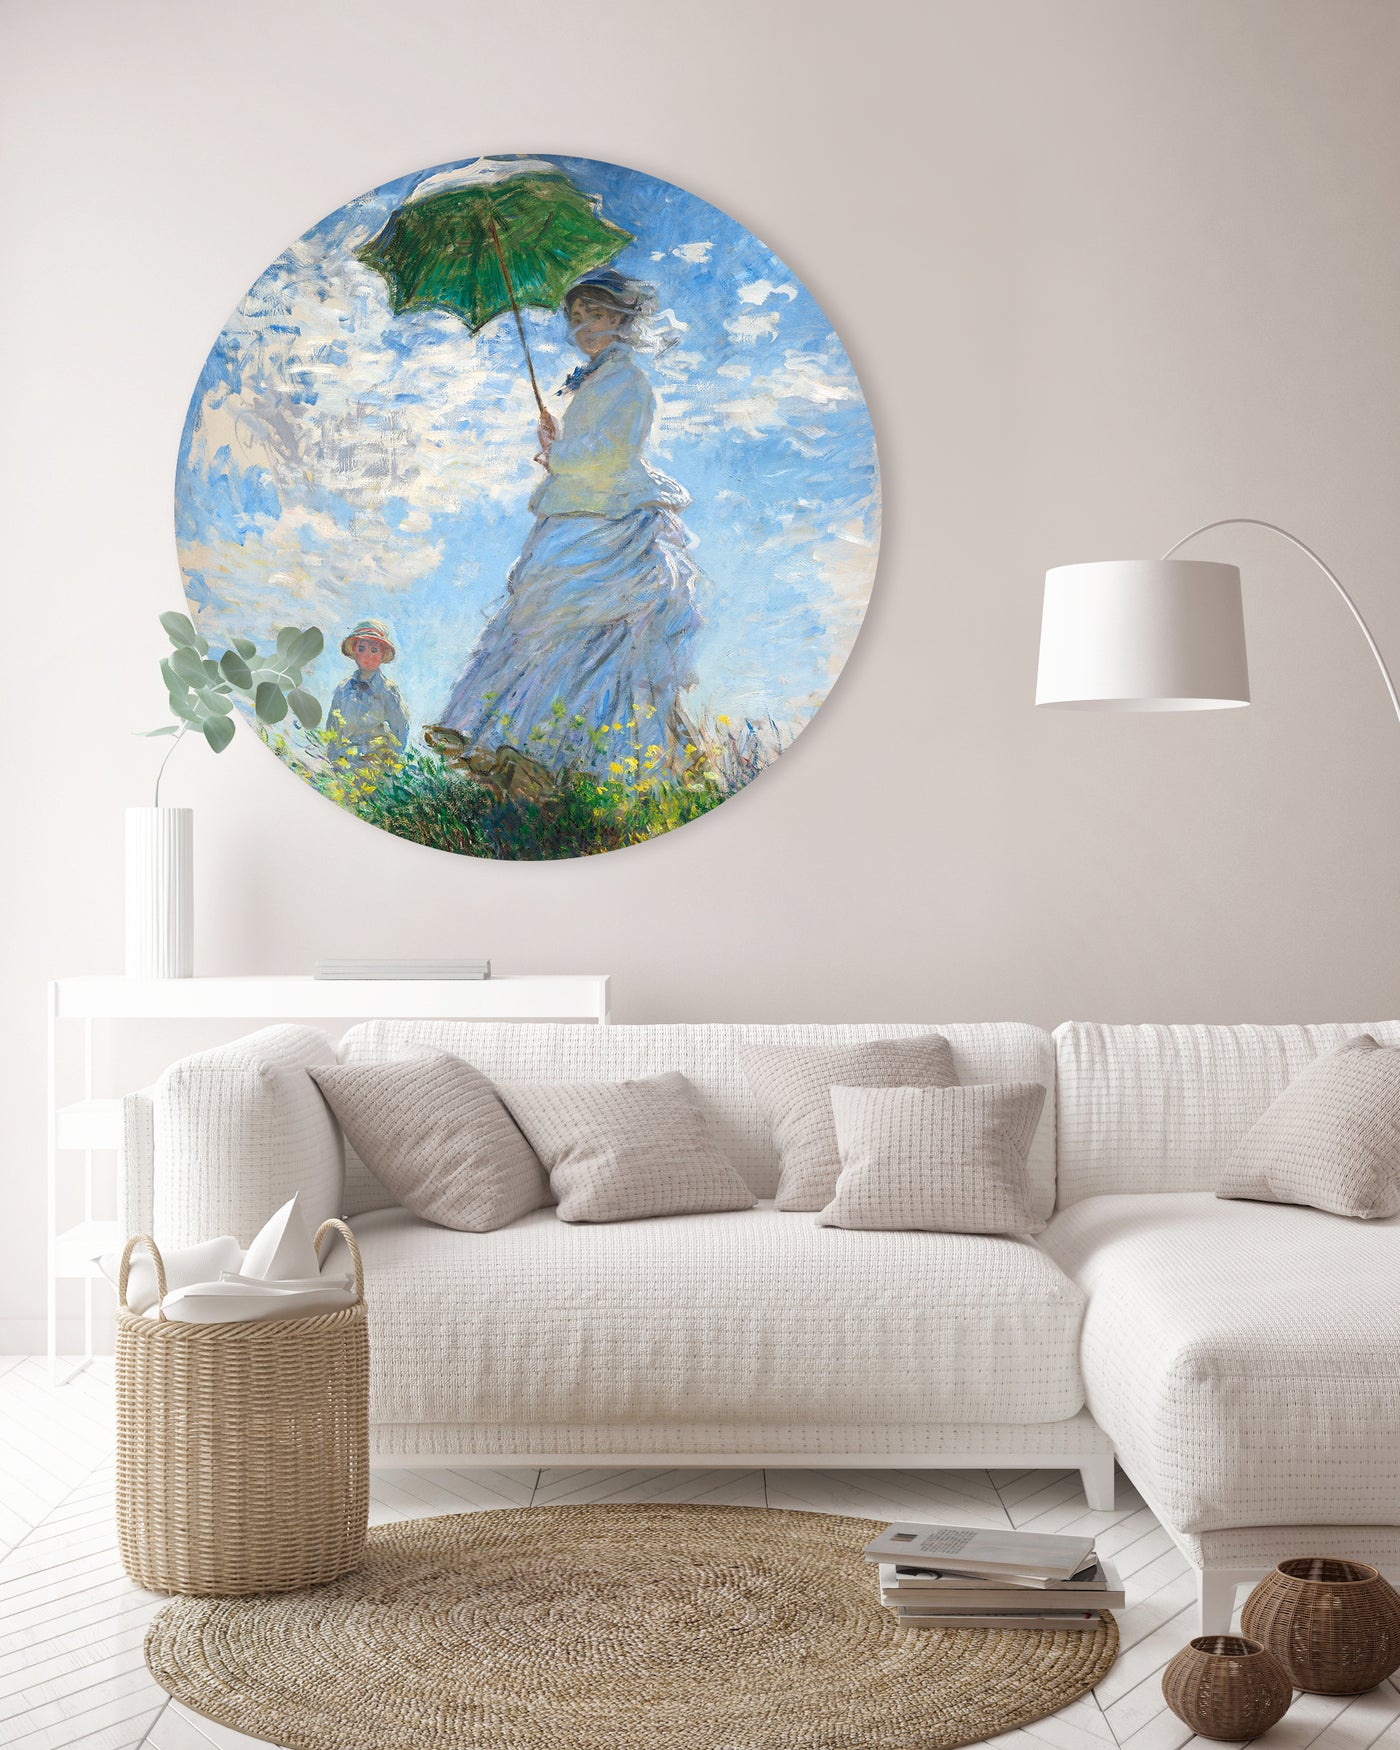 Claude Monet - Woman with a Parasol